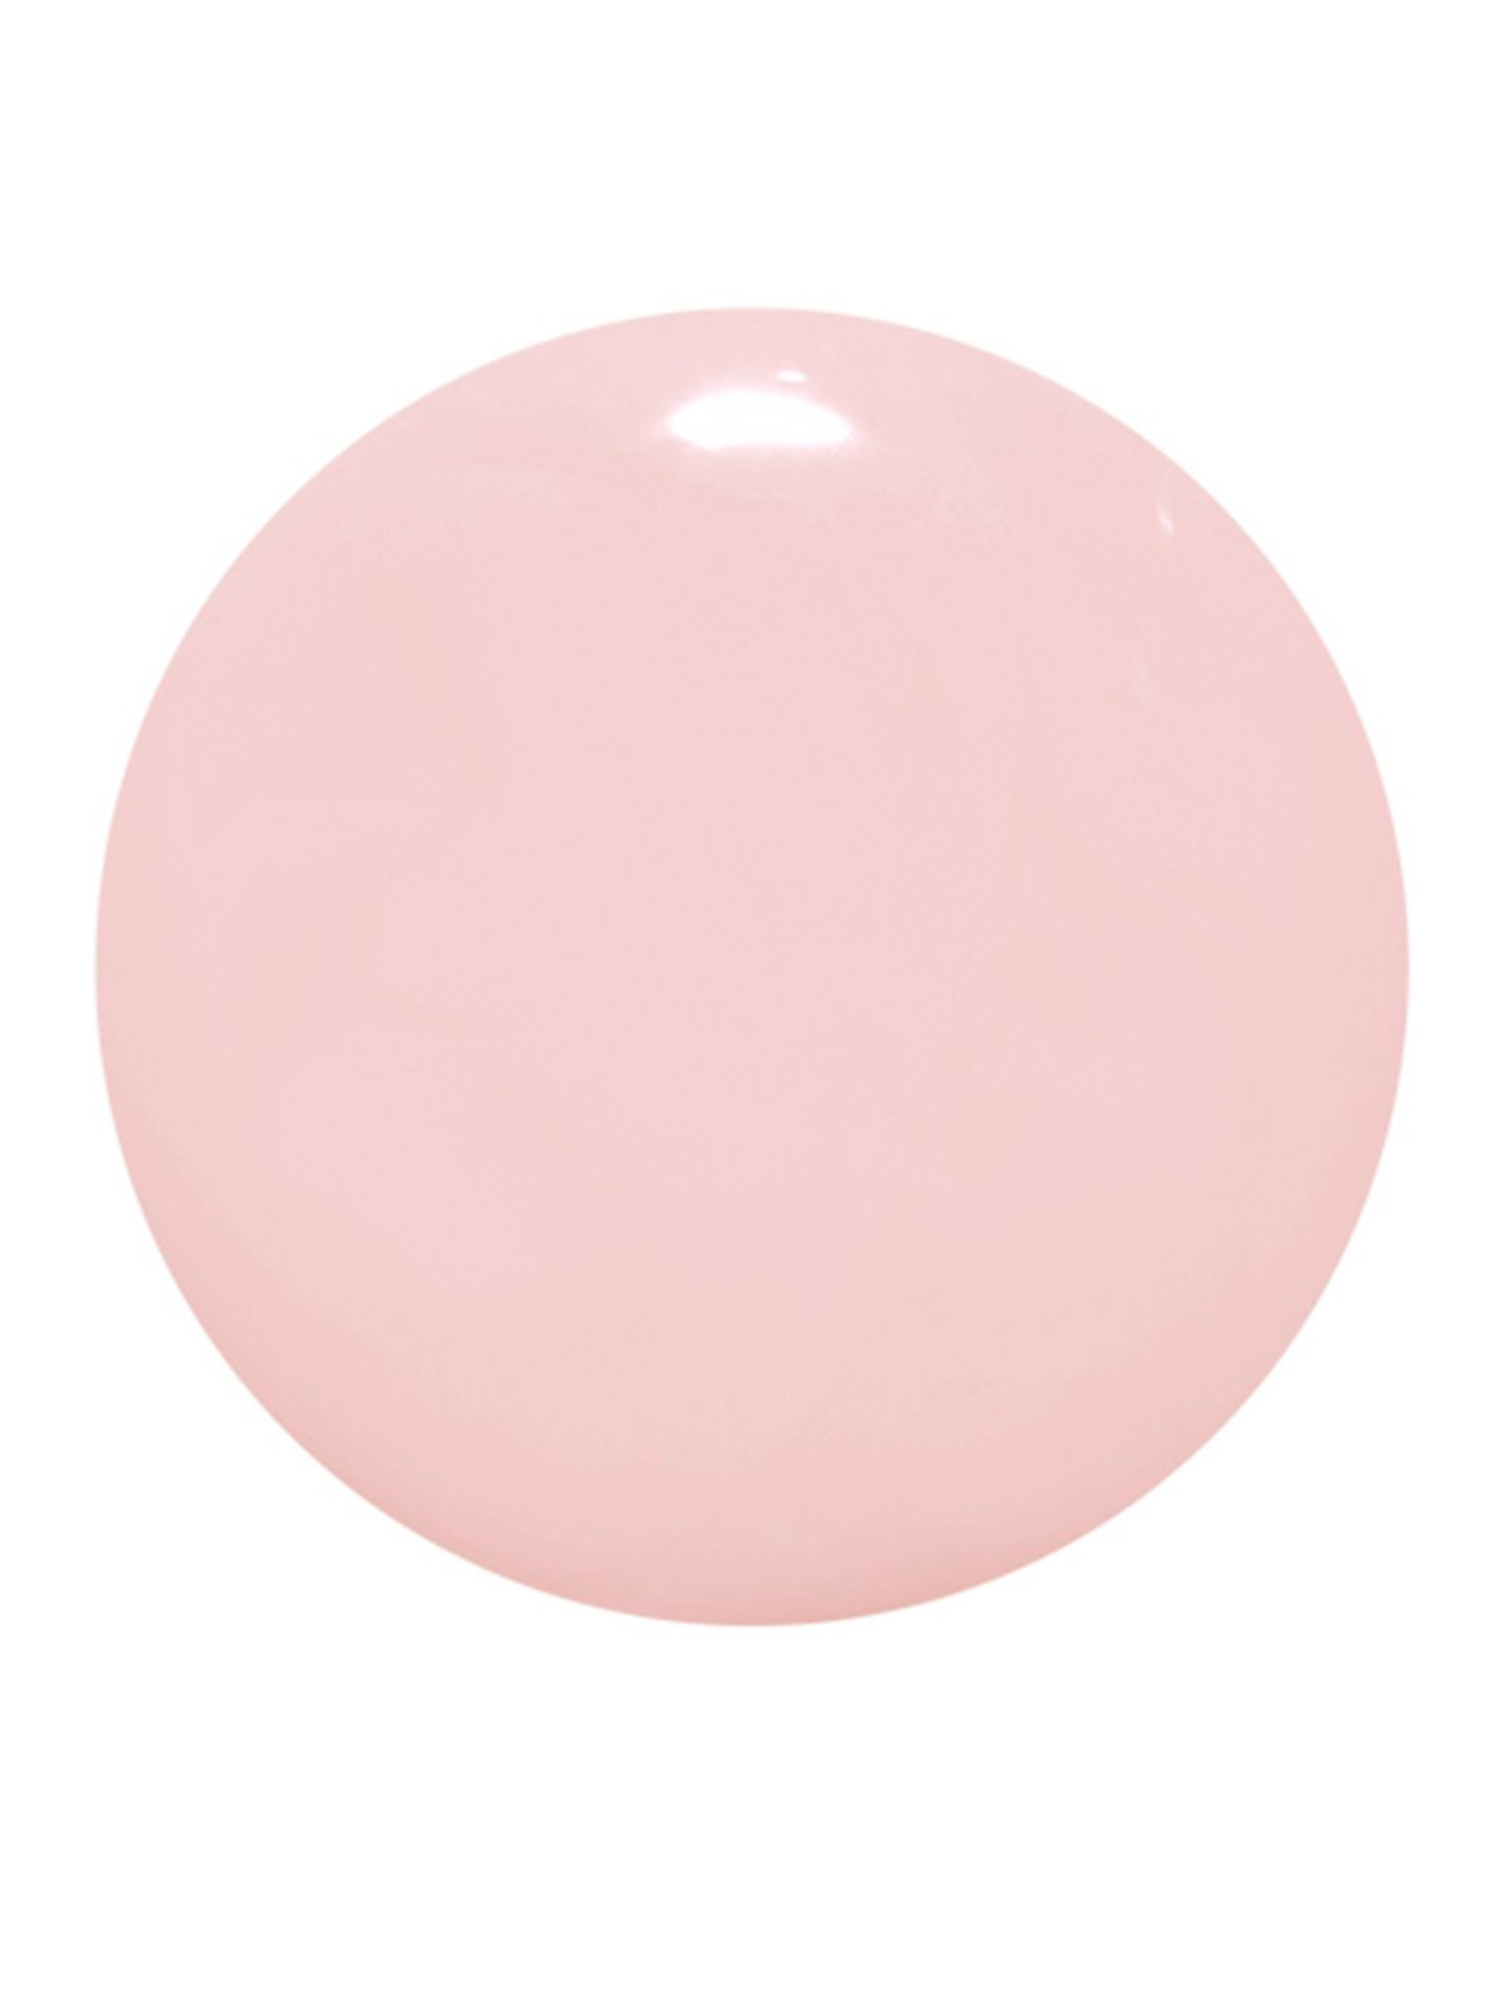 Rose Blossom - Oxygenated Pastel Pink Polish